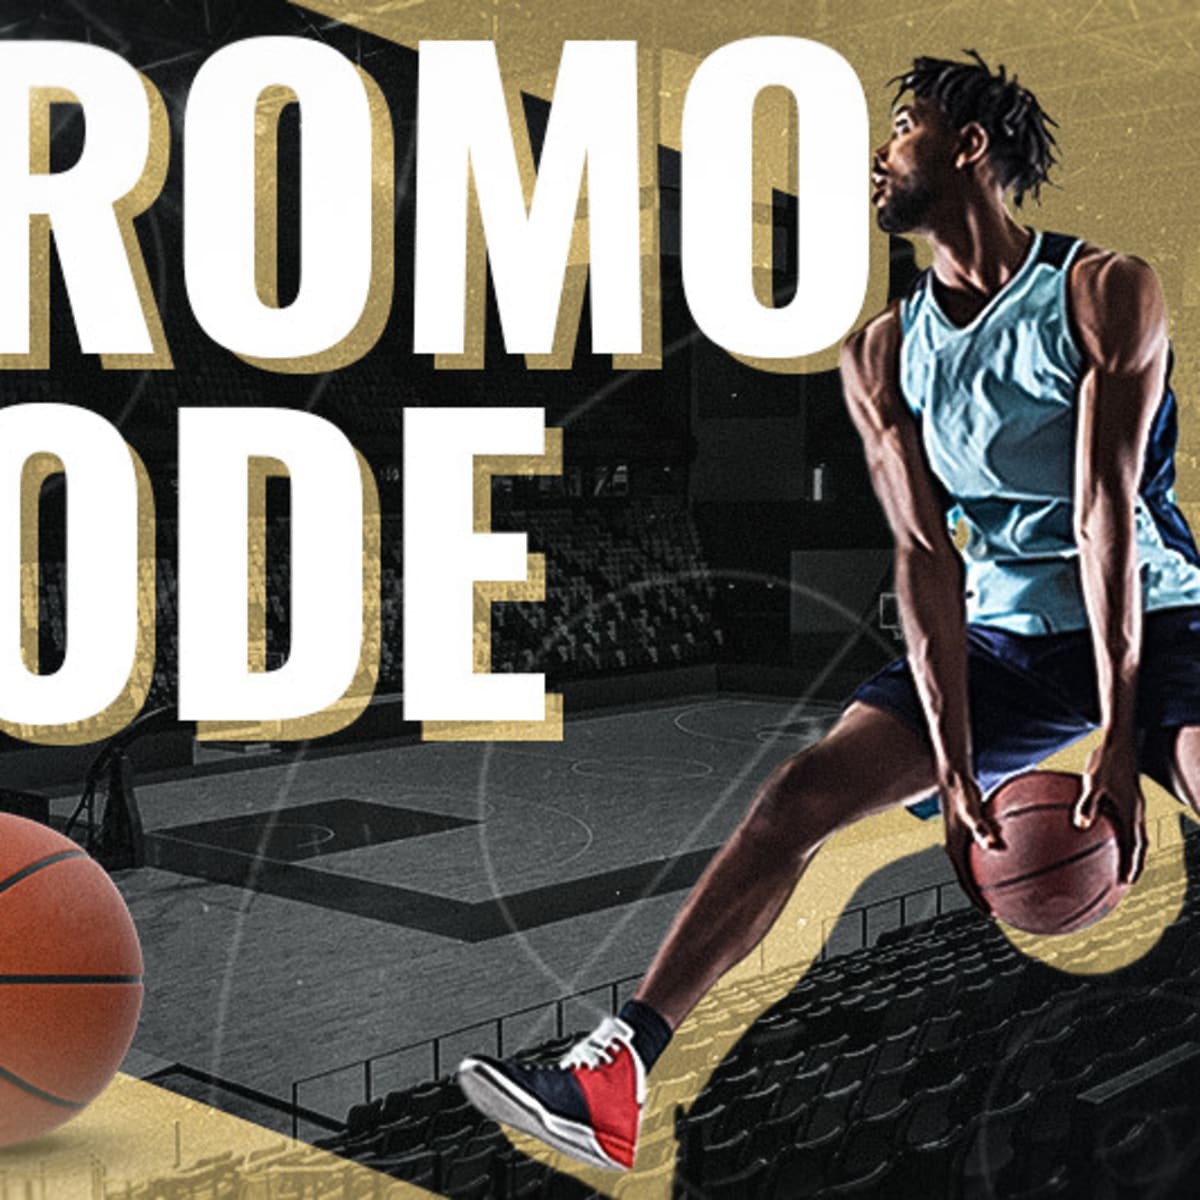 BetMGM Promo Code for NBA Finals Game 4 Tonight Snags $1,000 Bonus